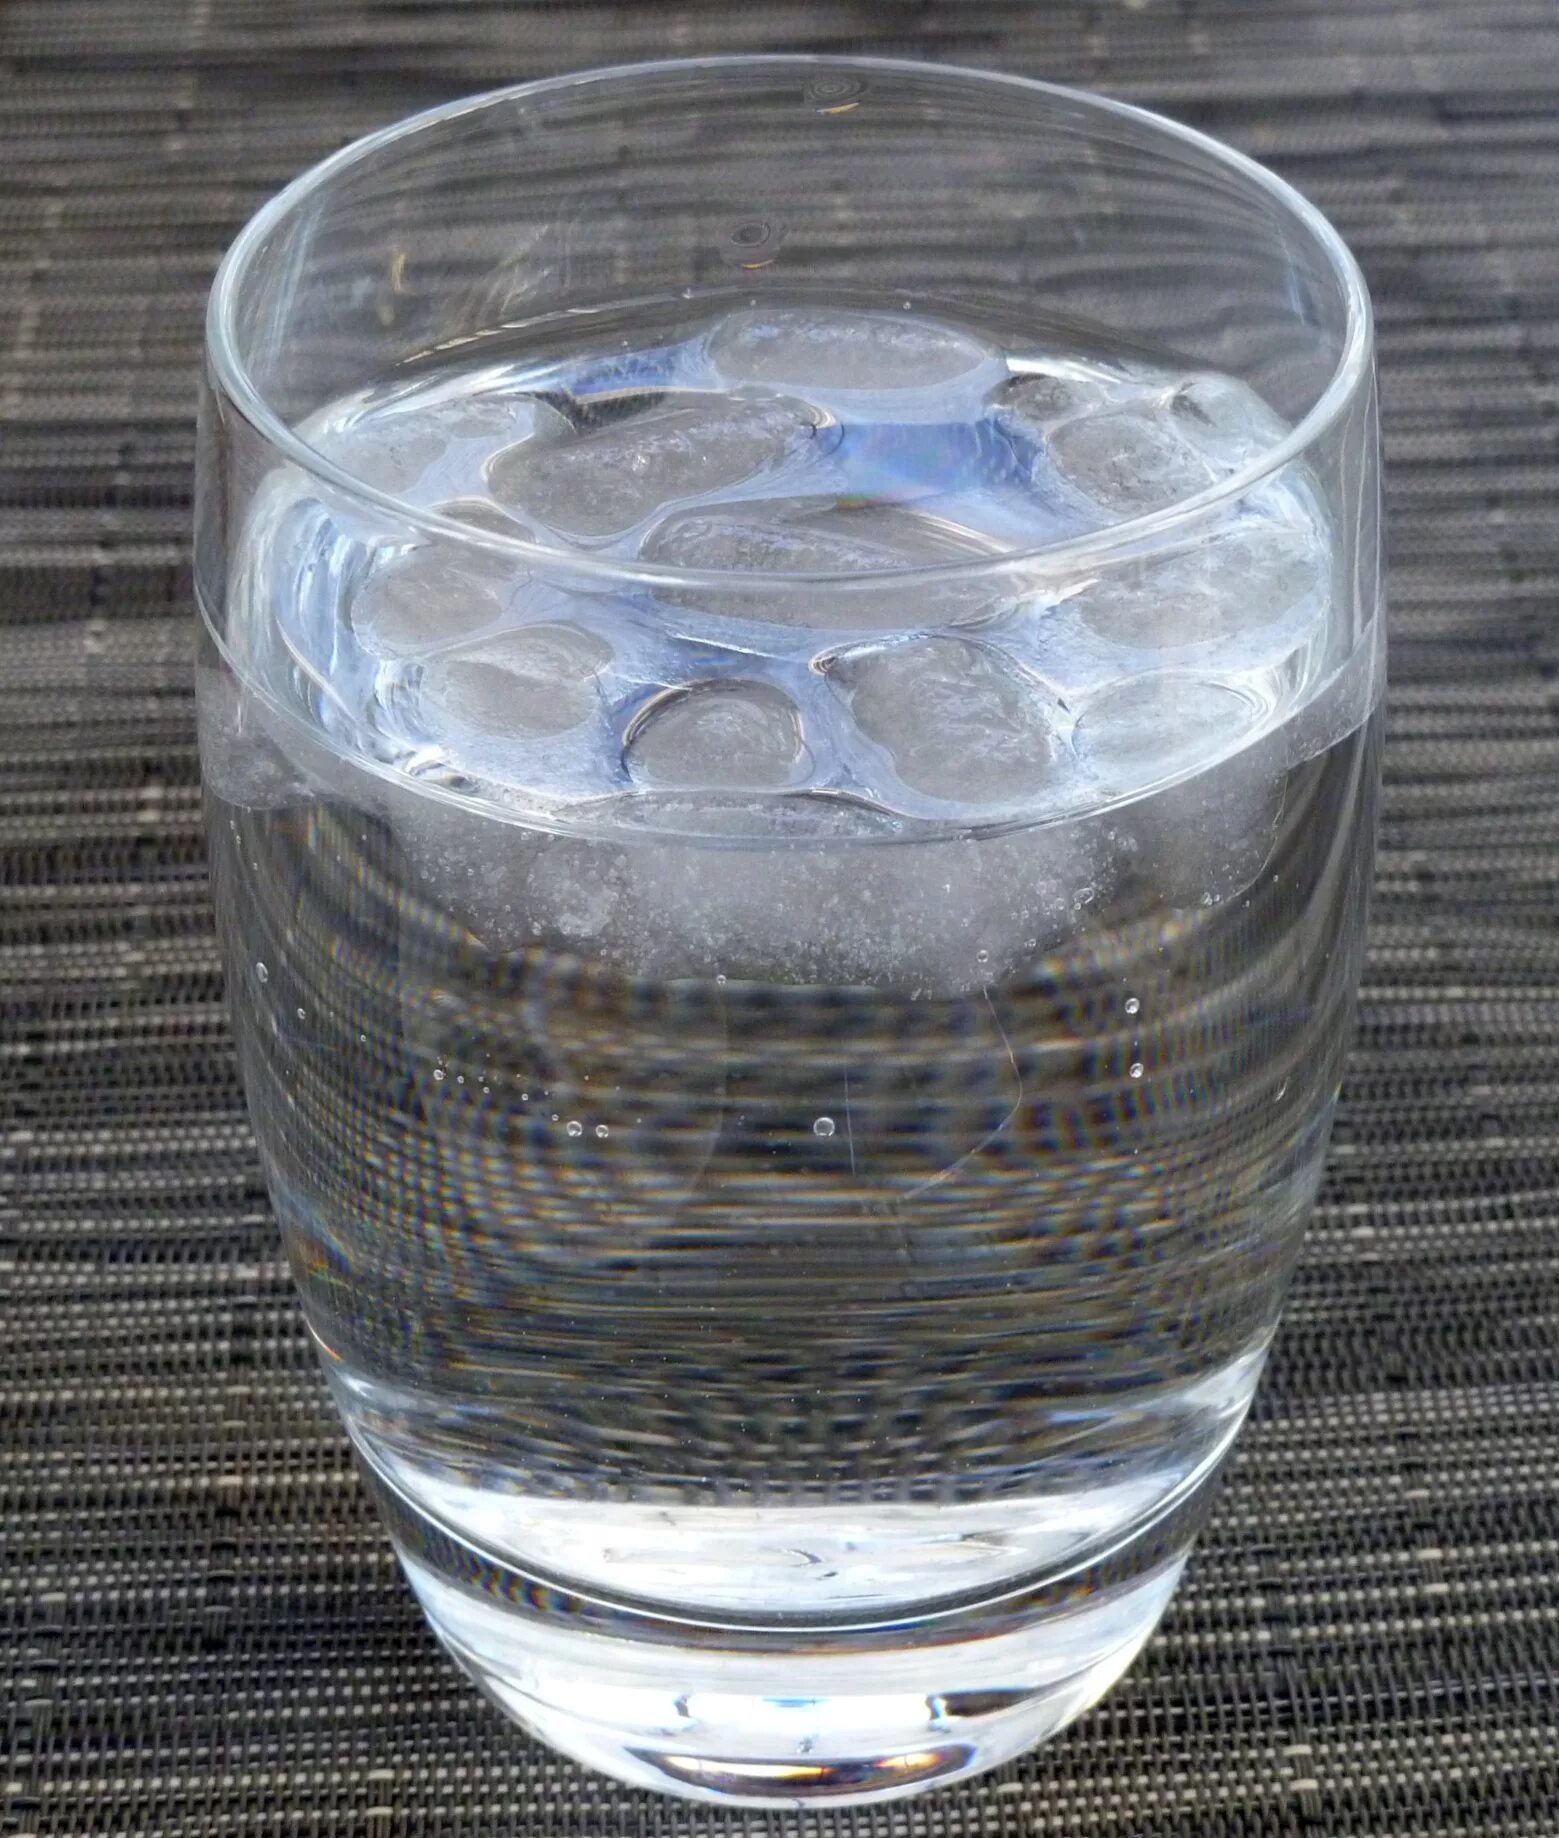 Домашняя вода. Стакан воды дома. Вода домашний стакан. Обычная вода. Стакан воды в домашних условиях.